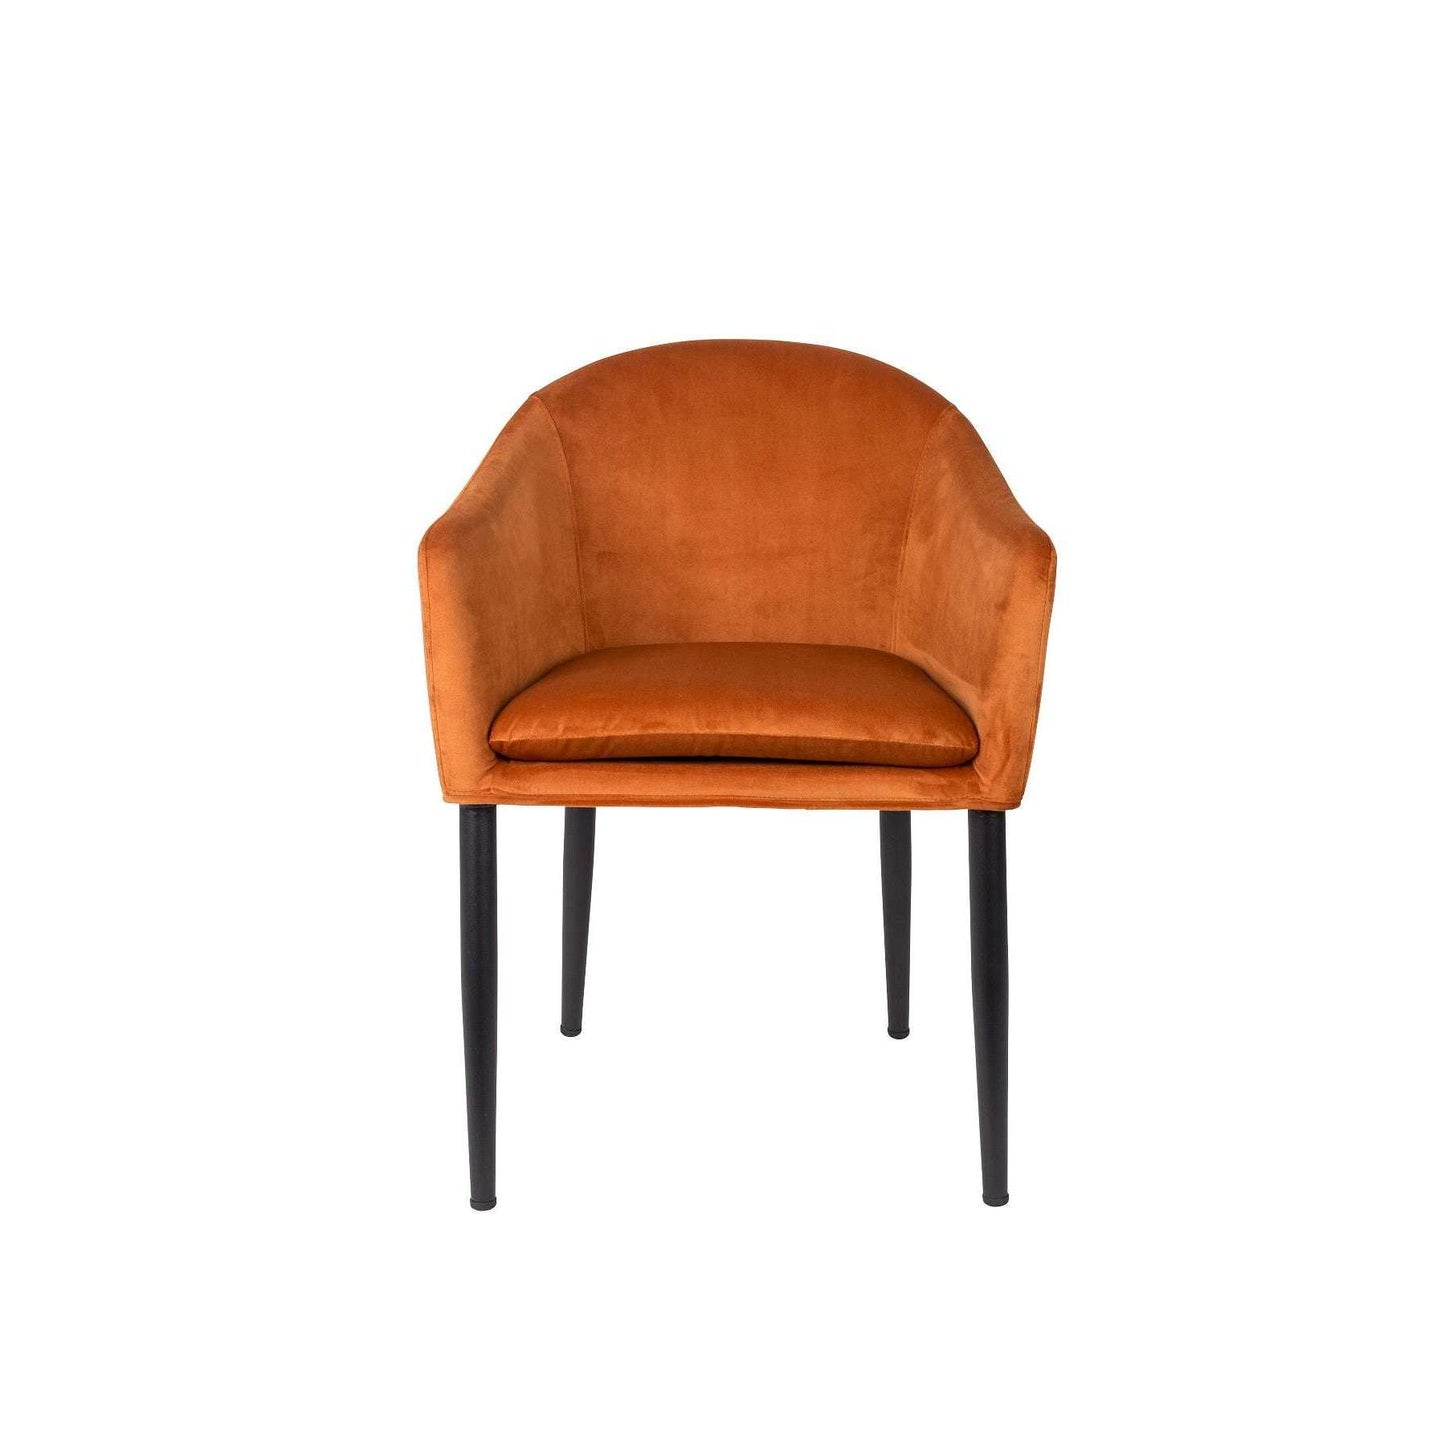 Staerkk stoel met armleuningen catelyn oranje 55,5 x 57 x 77 cm